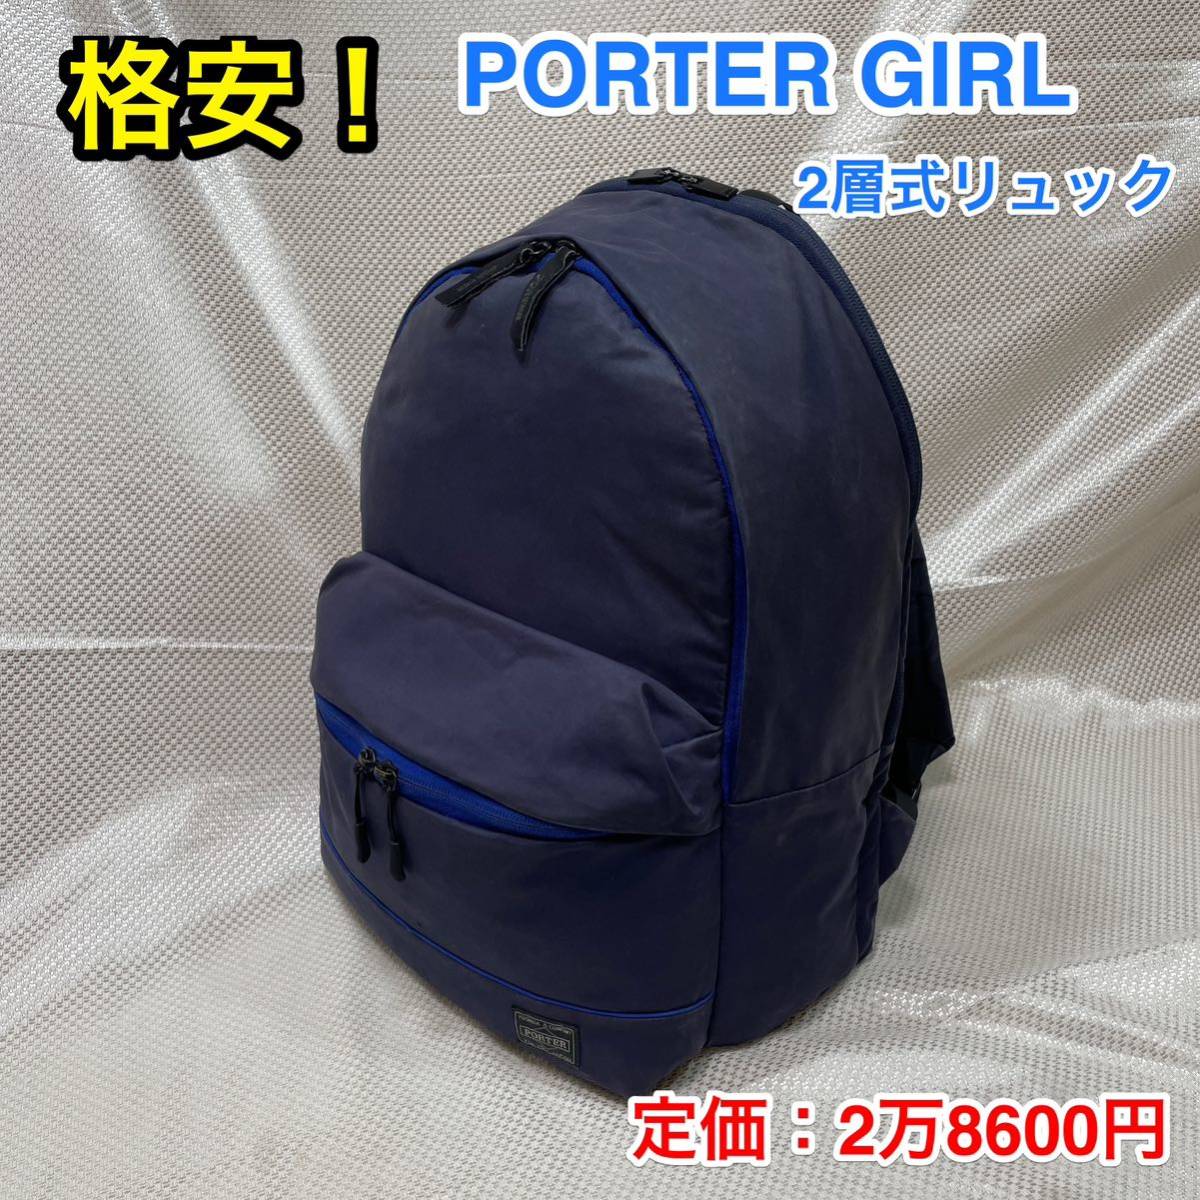 [ cheap ] Yoshida bag PORTER GIRL MOUSSE 2 layer type Day Pack * Porter girl mousse rucksack * commuting going to school mother's bag *751-09876